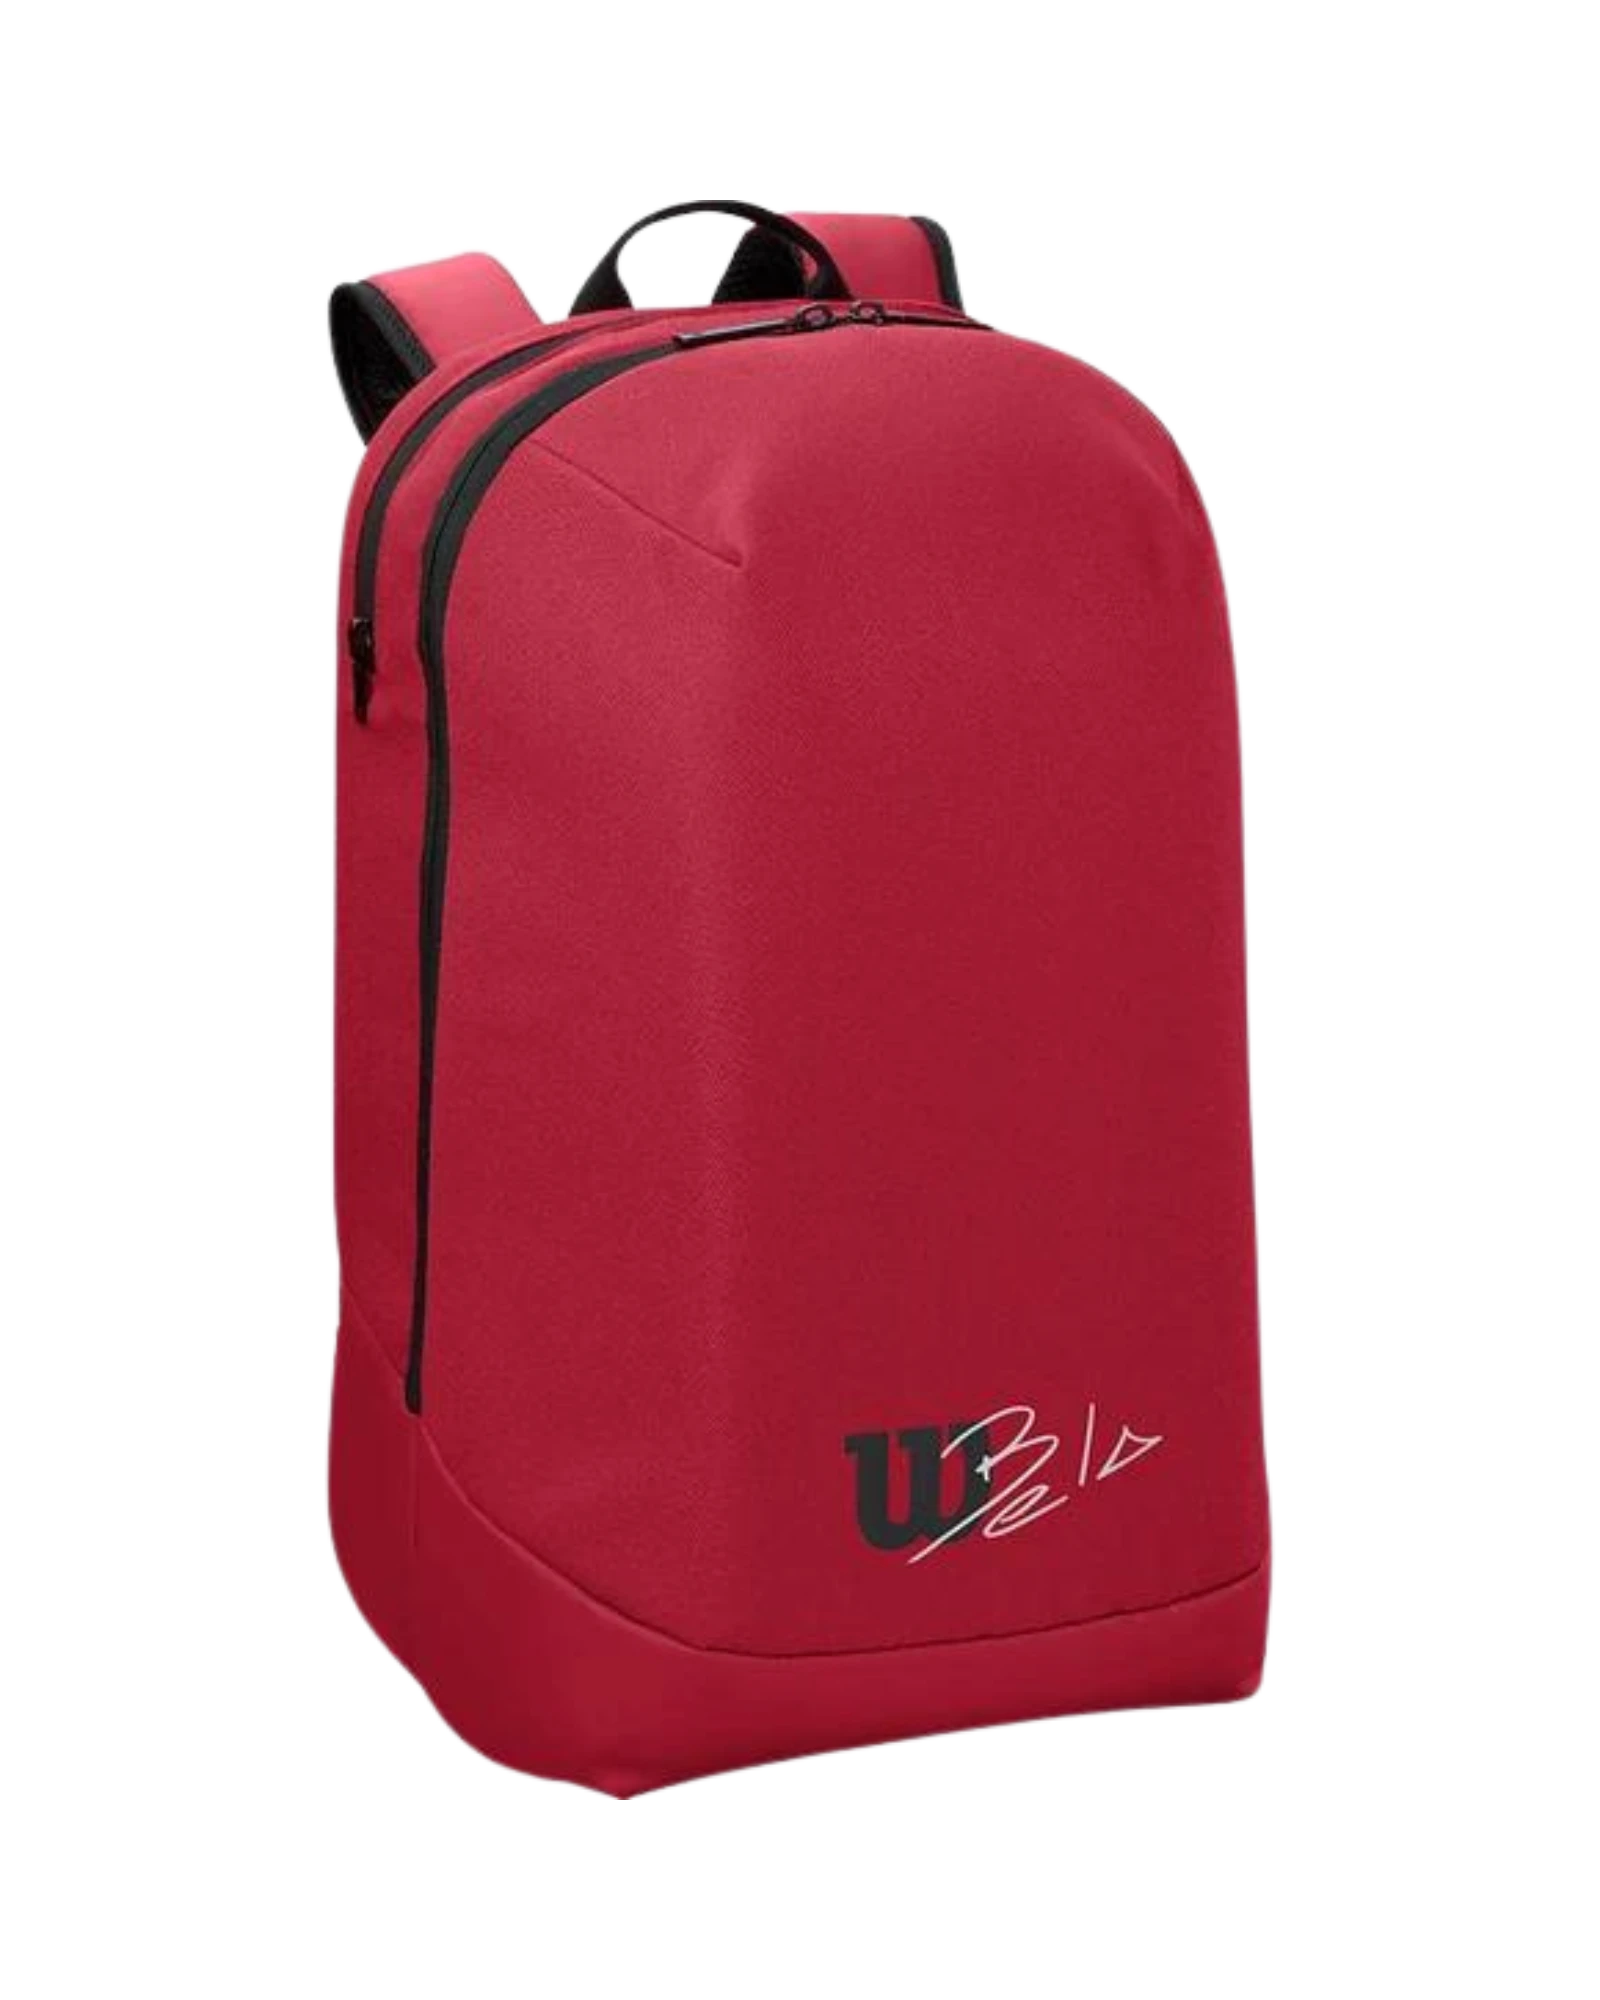 The Wilson Bela DNA Padel Backpack